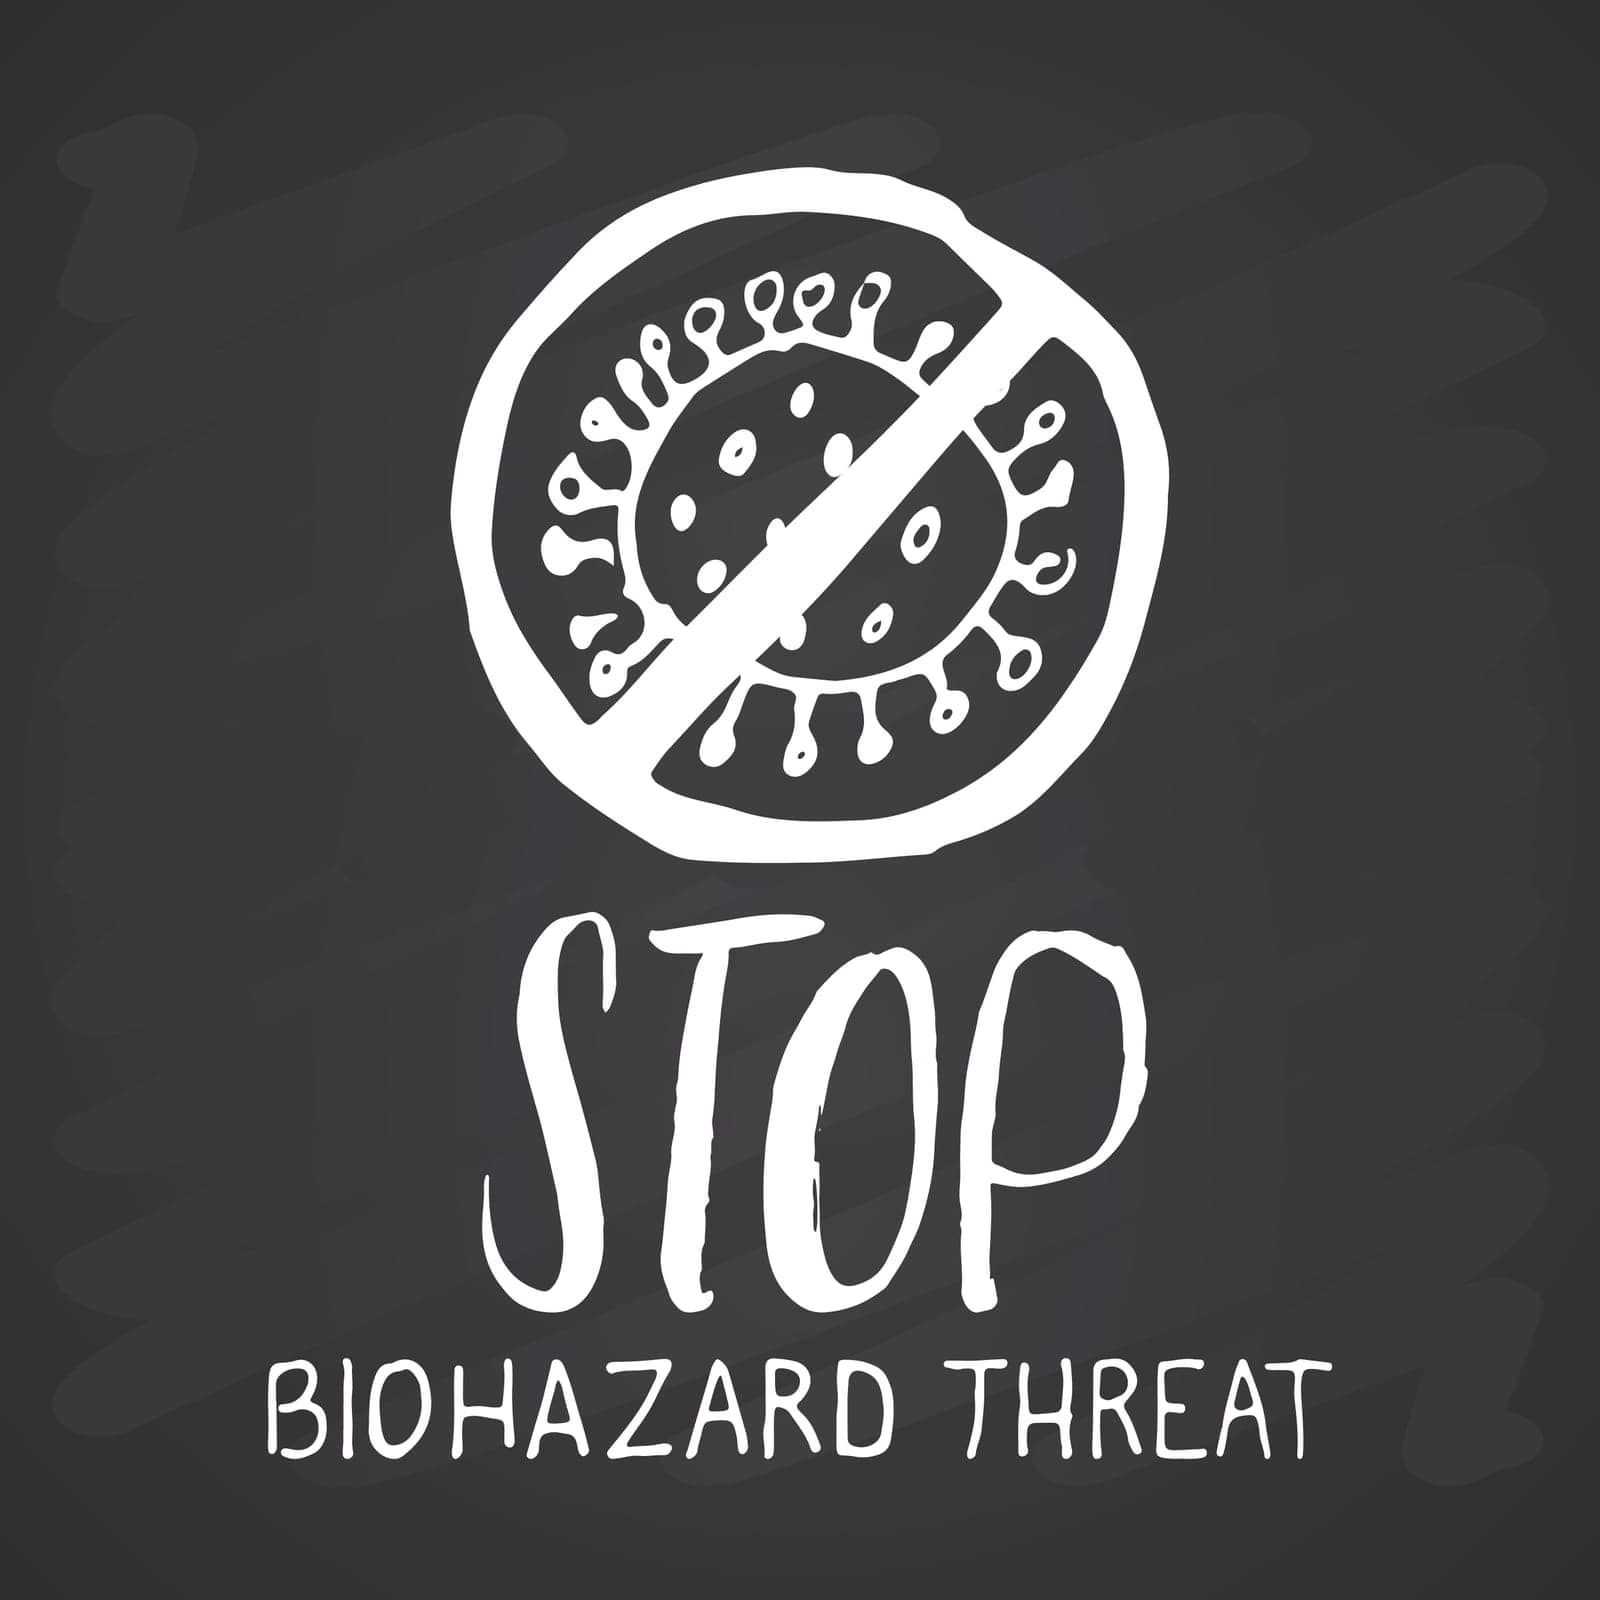 Biohazard threat lettering Hand Drawn icon. Vector illustration on chalkboard background.